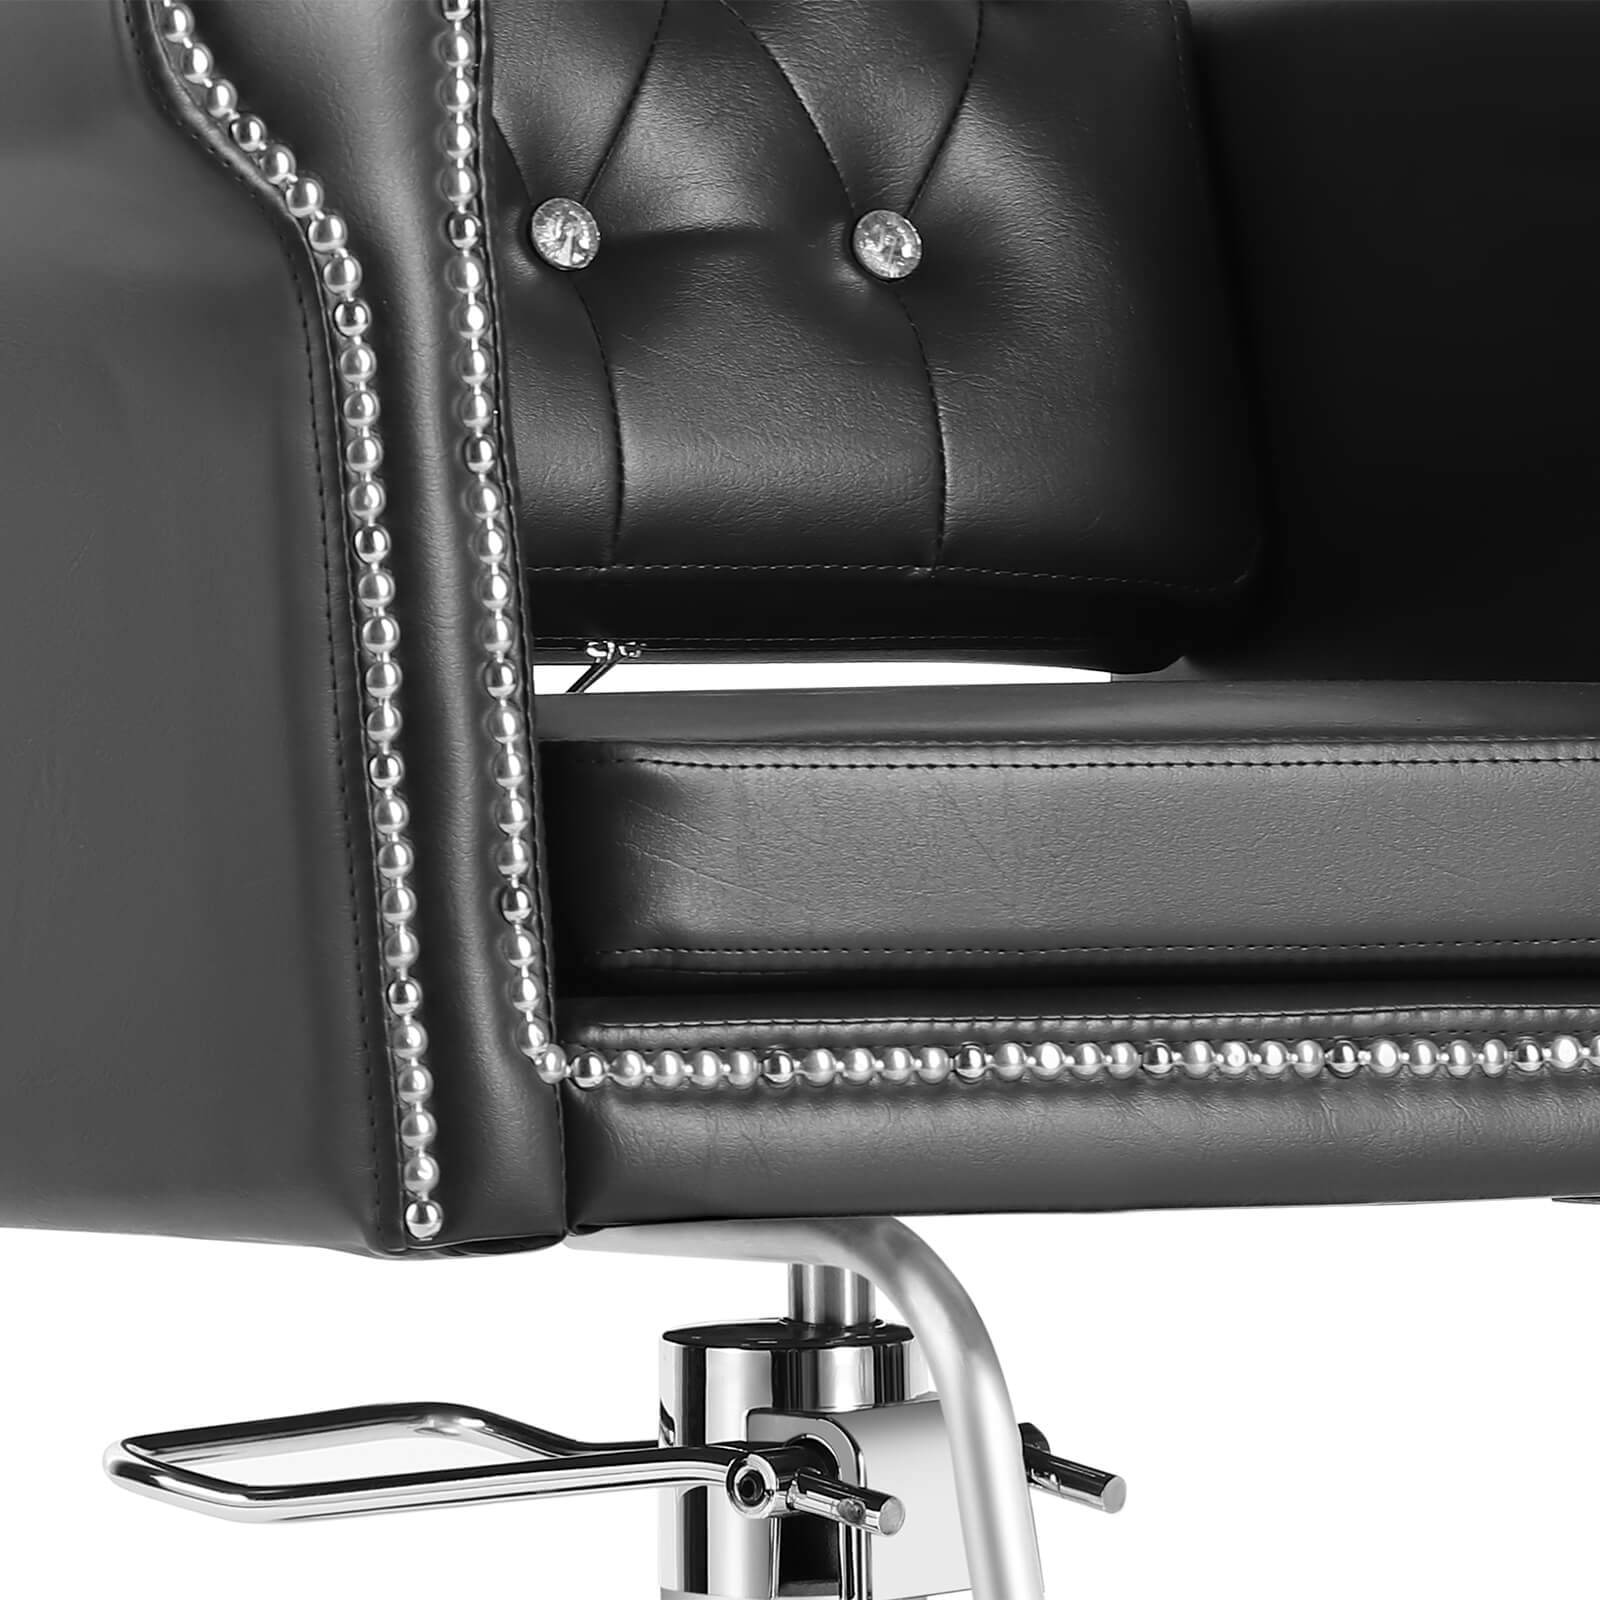 #5006 Vintage Hydraulic Styling Chair